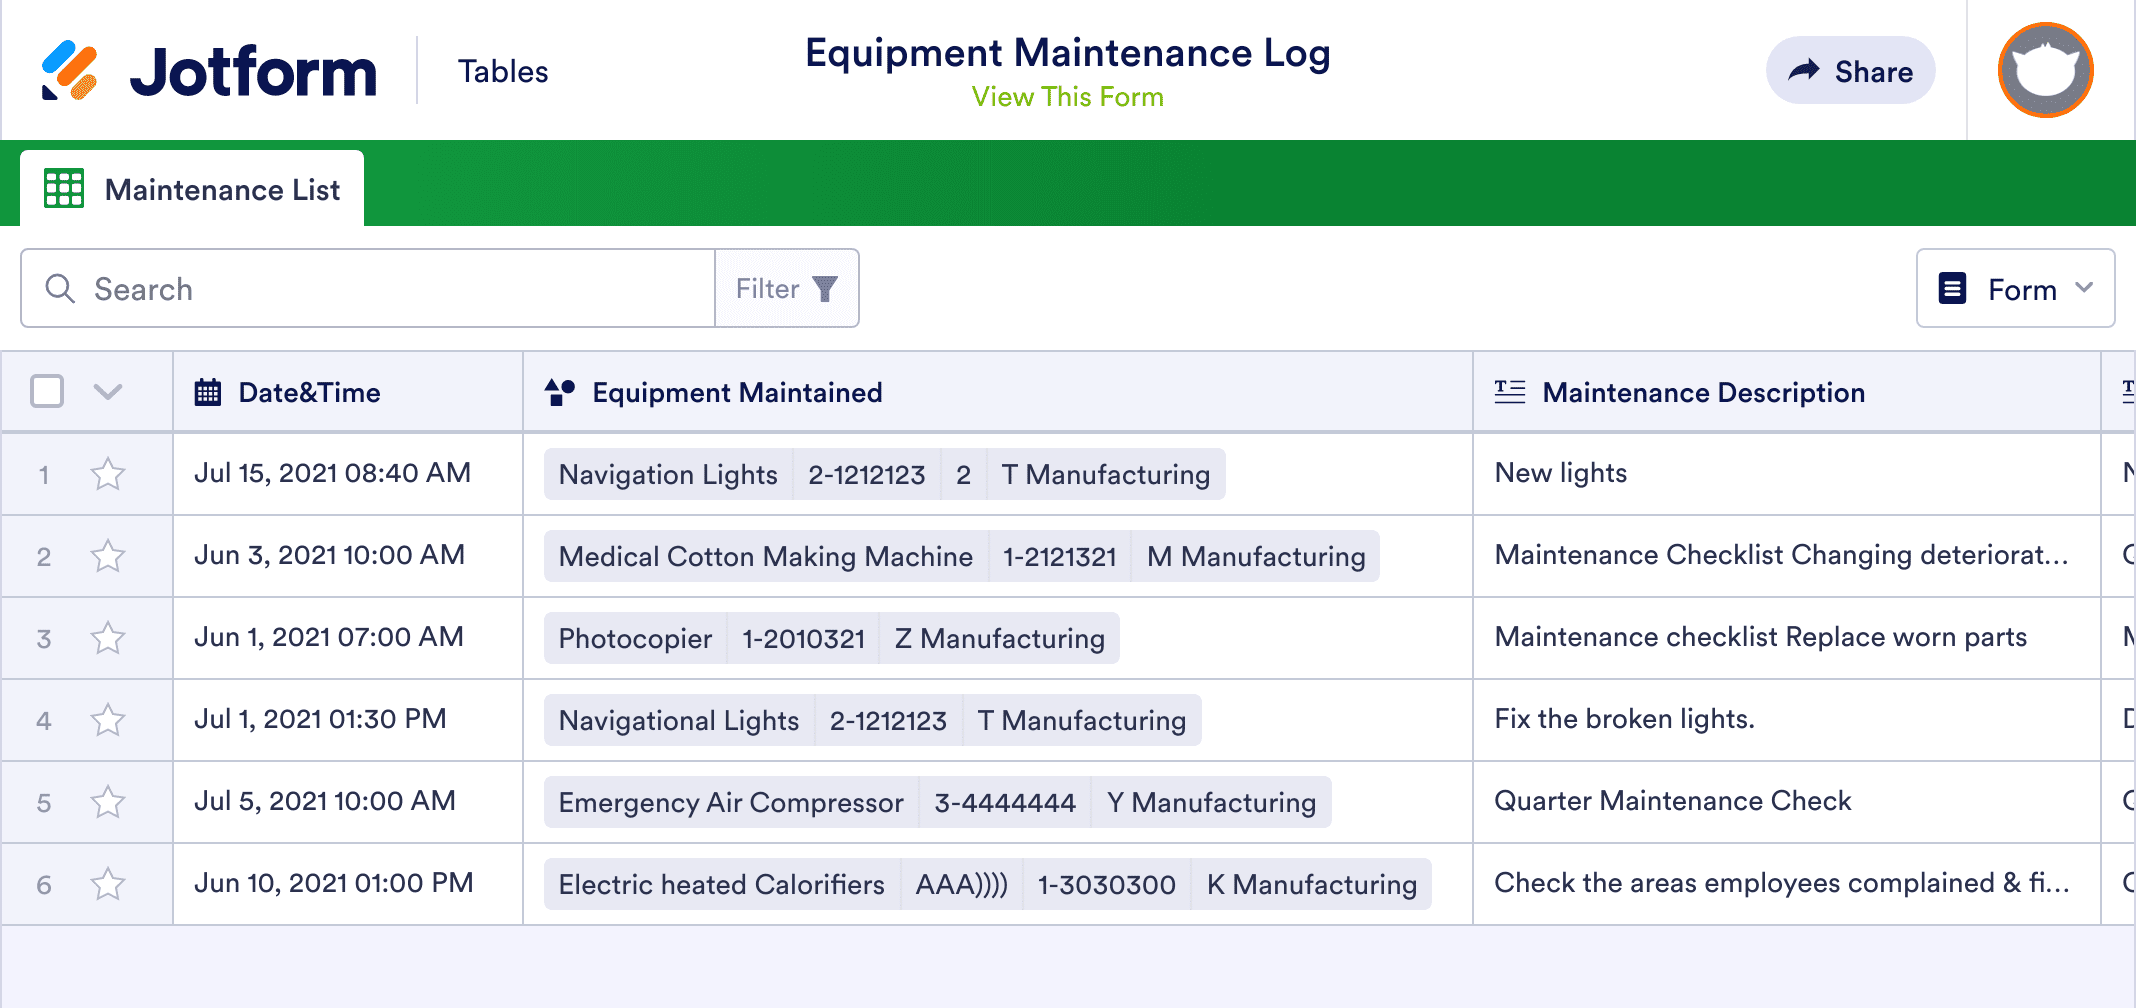 Equipment Maintenance Log 